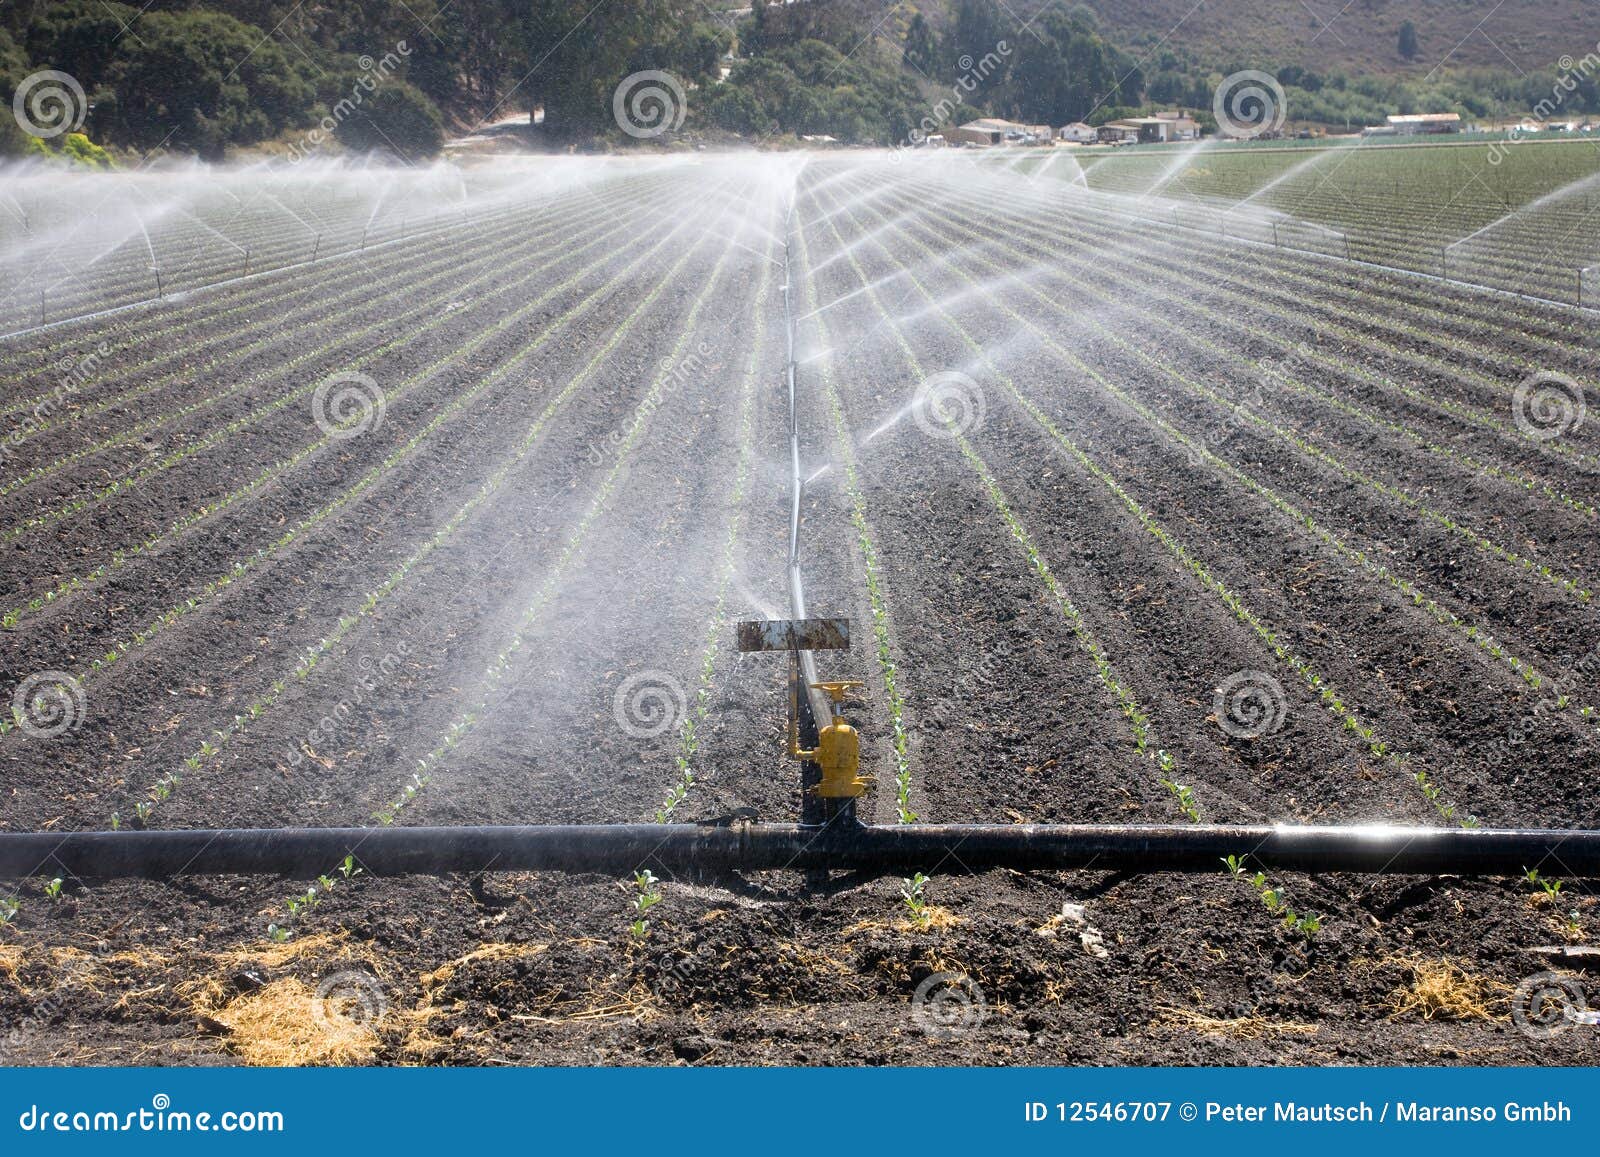 irrigation plant